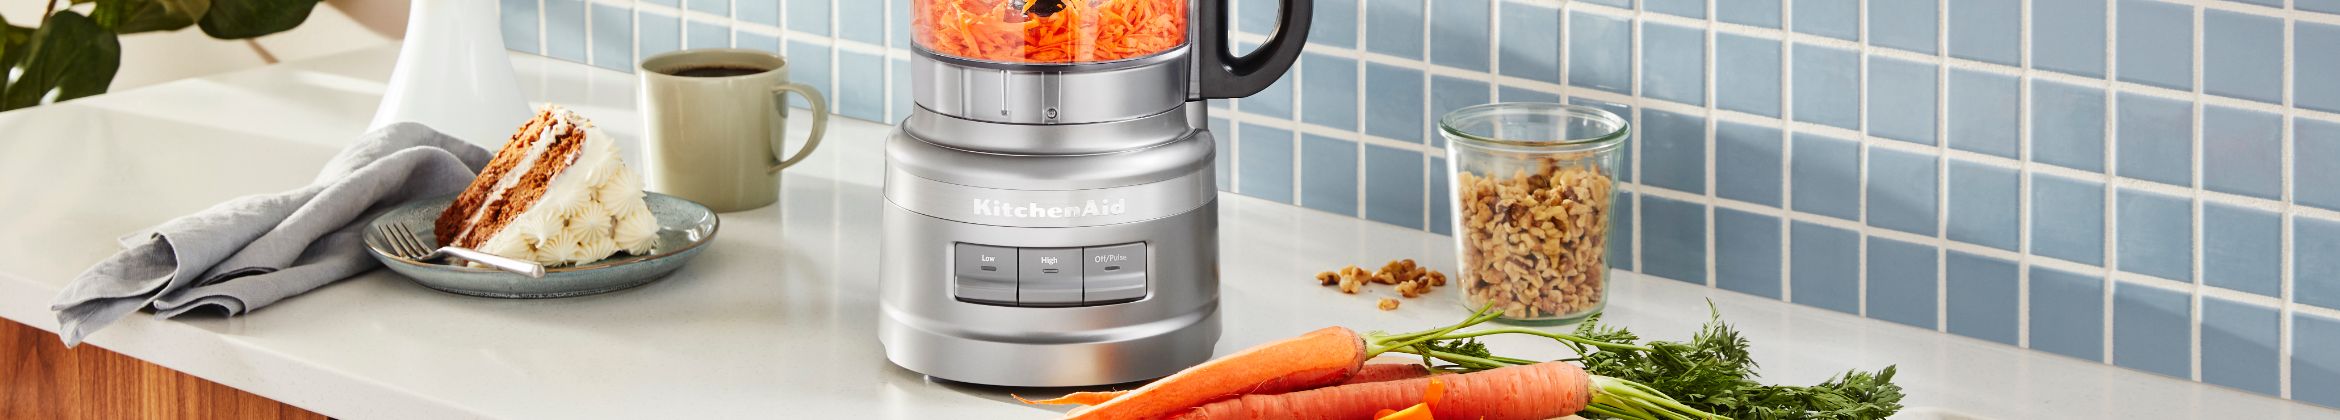 Robot culinaire KitchenAid